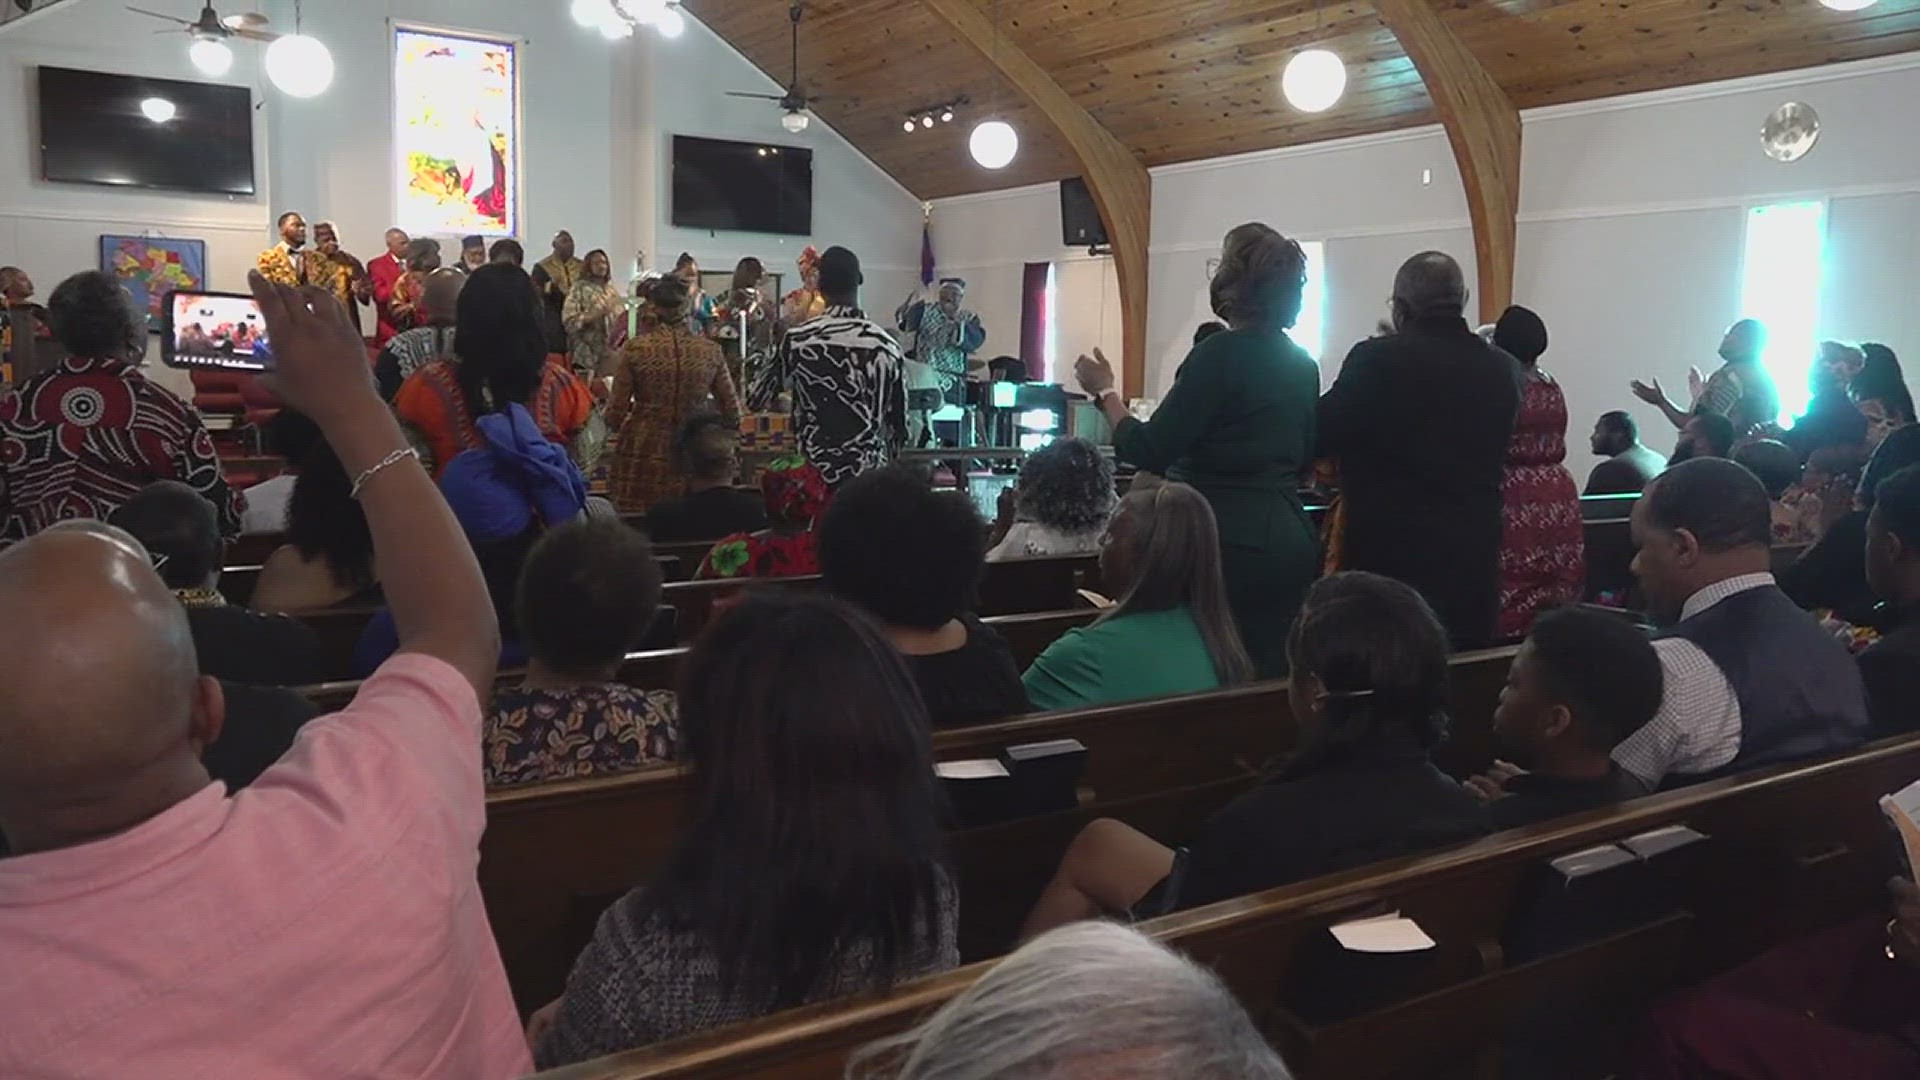 The Salem United Methodist Church in Orange celebrated its 159th Anniversary on Sunday.